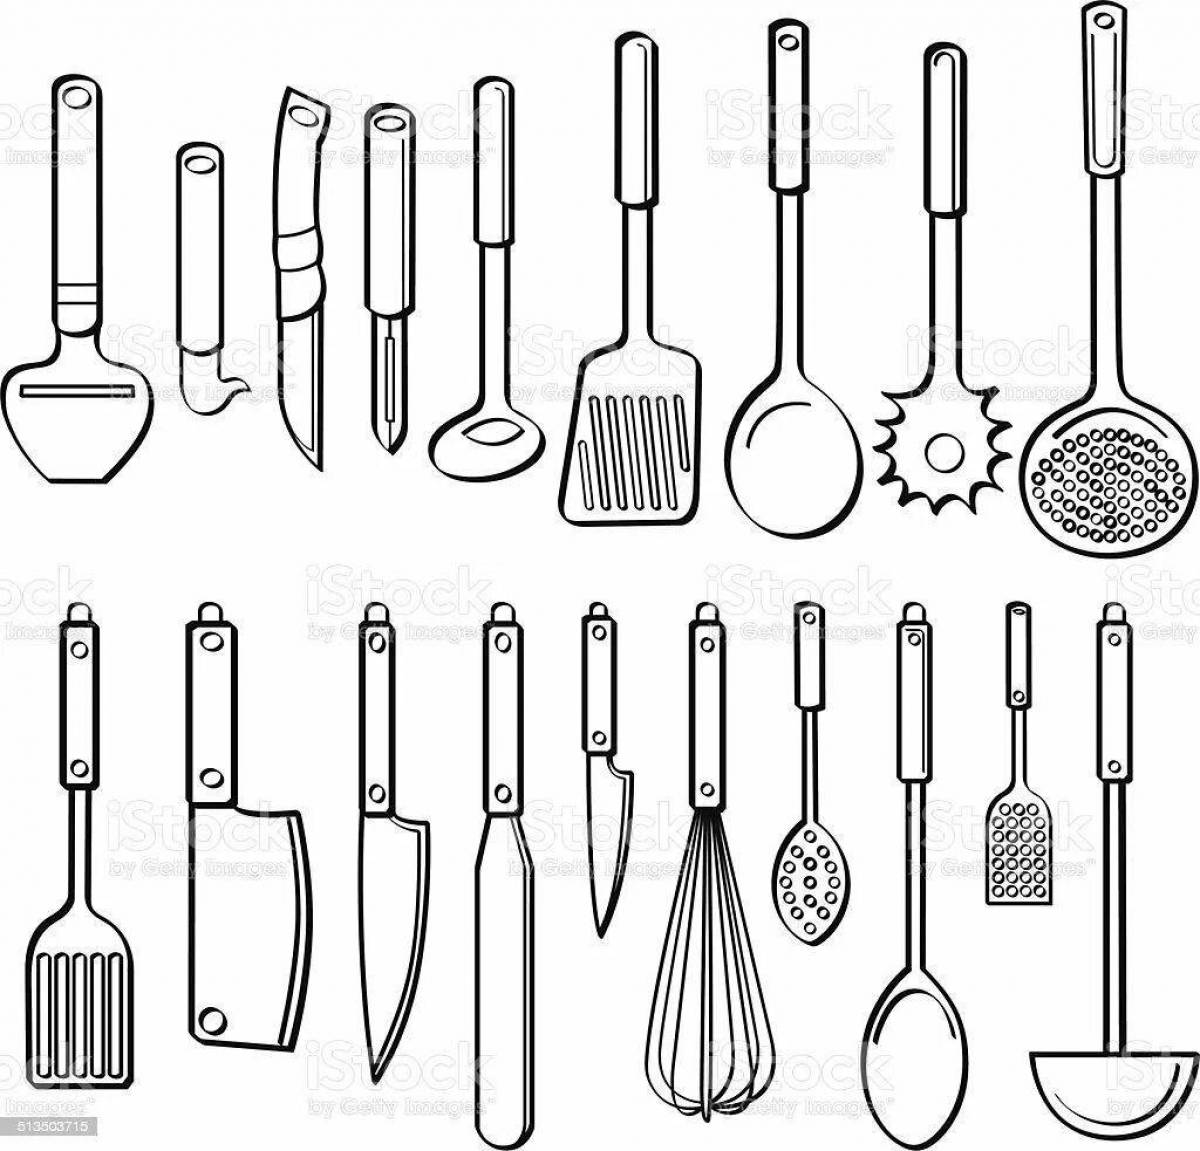 Wonderful kitchen utensils coloring book for kids